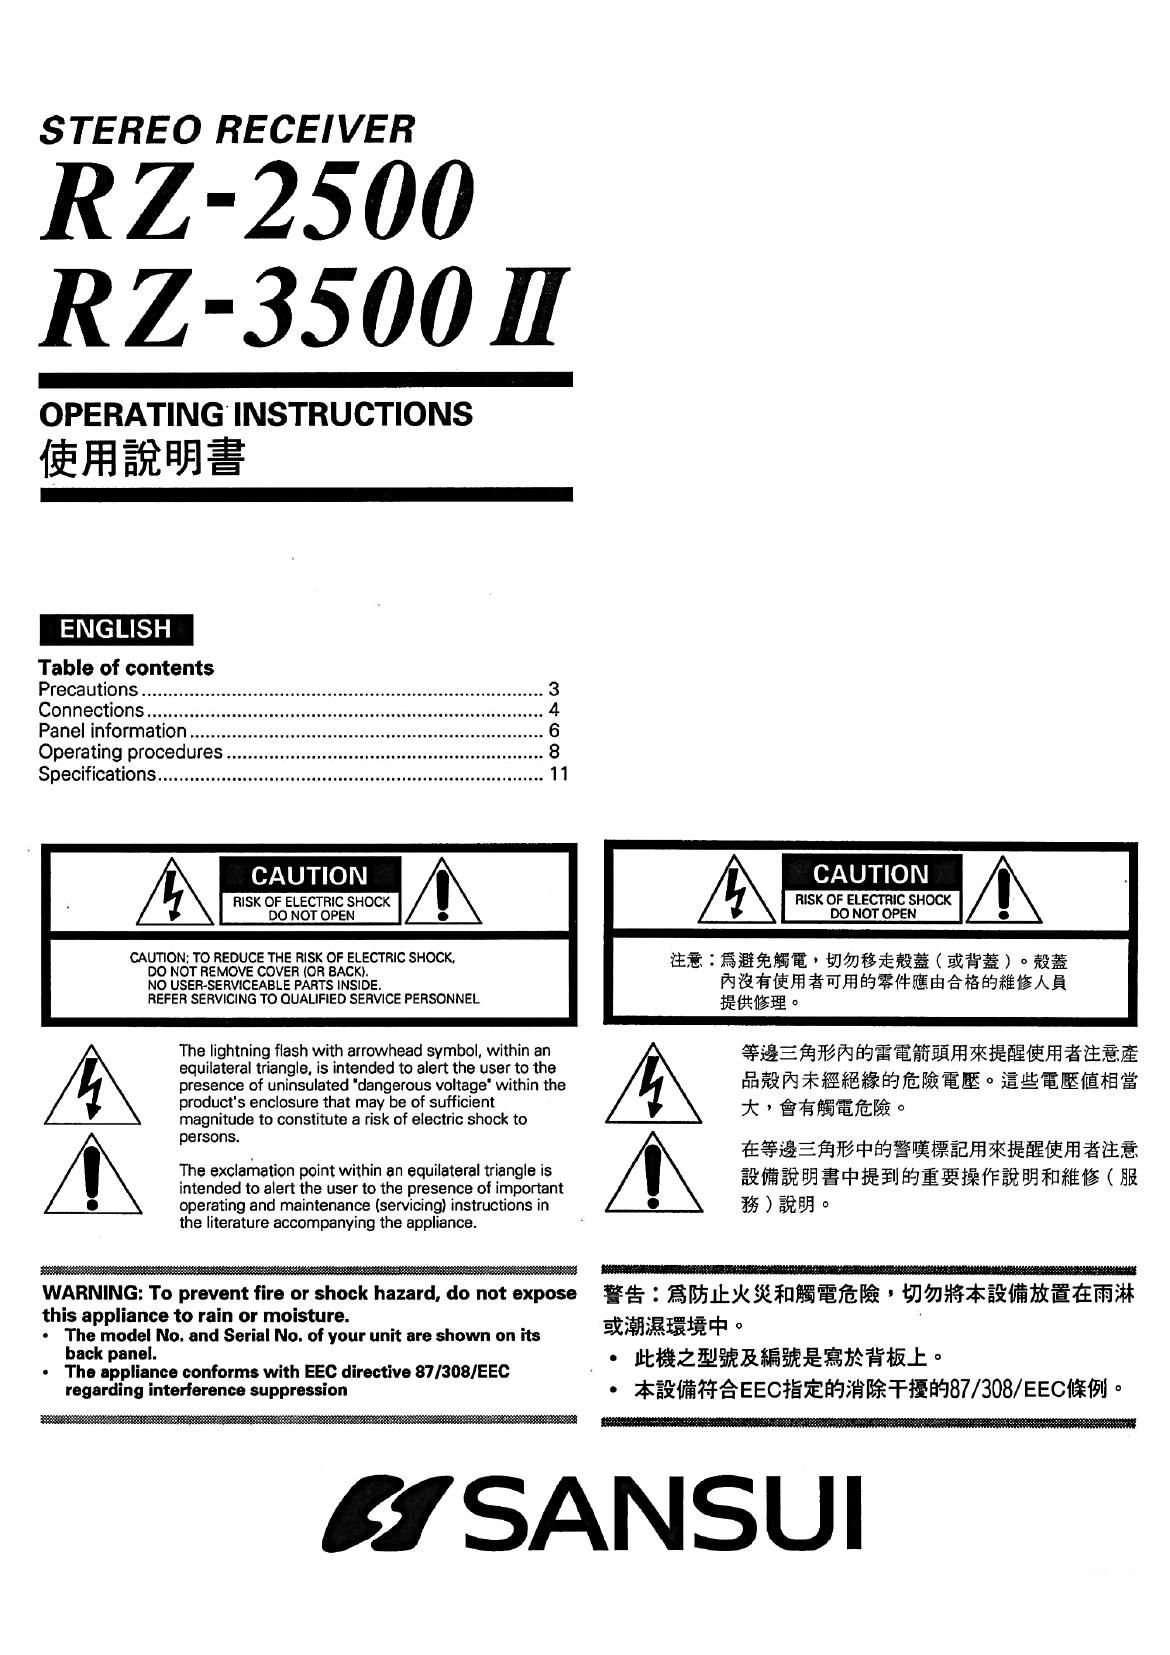 Sansui RZ 3500 II Owners Manual